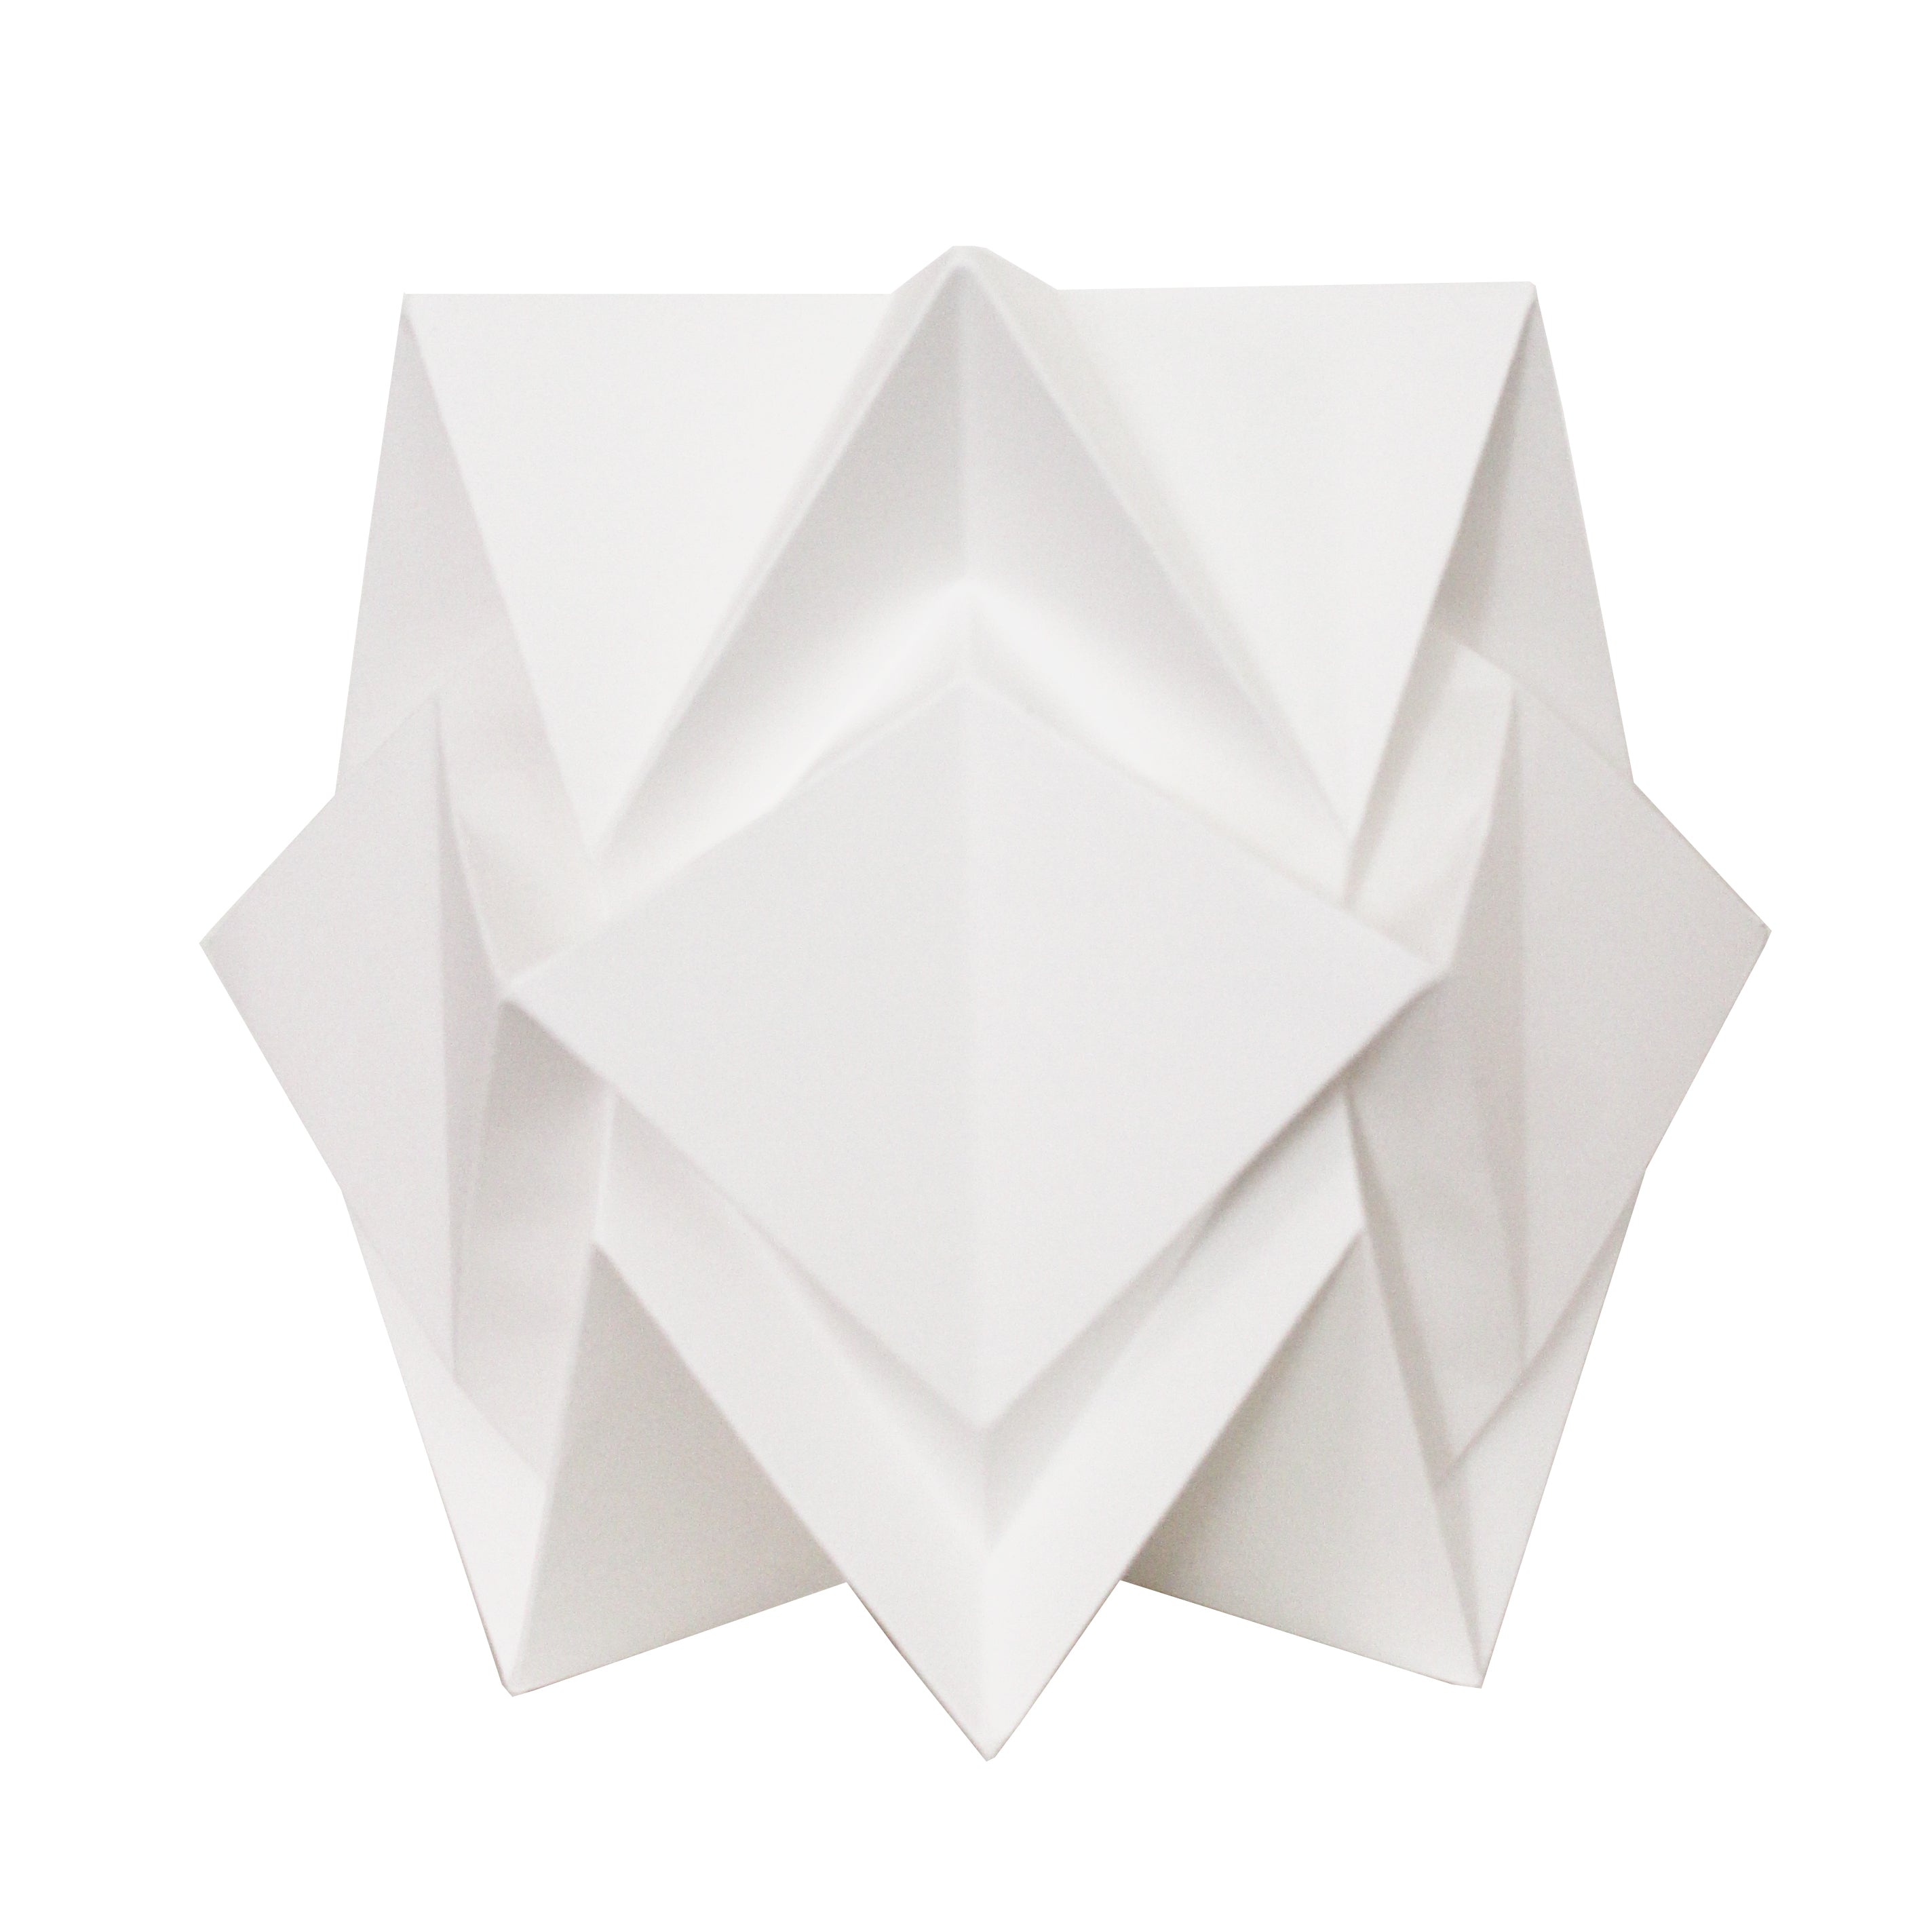 Lampe de table origami - size s